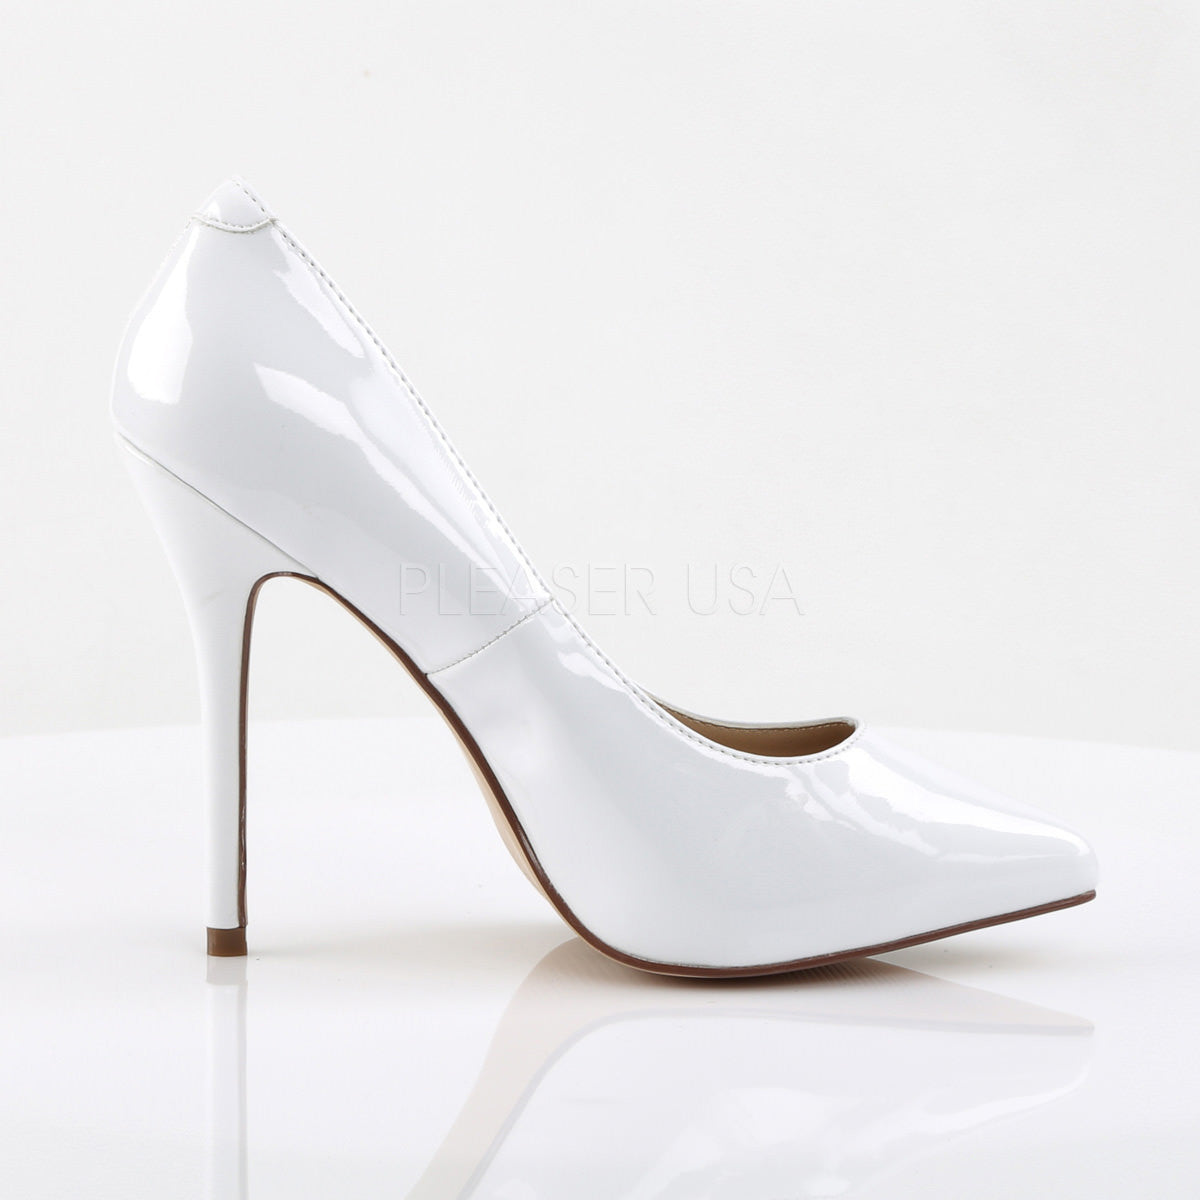 5 Inch Heel AMUSE-20 White Patent